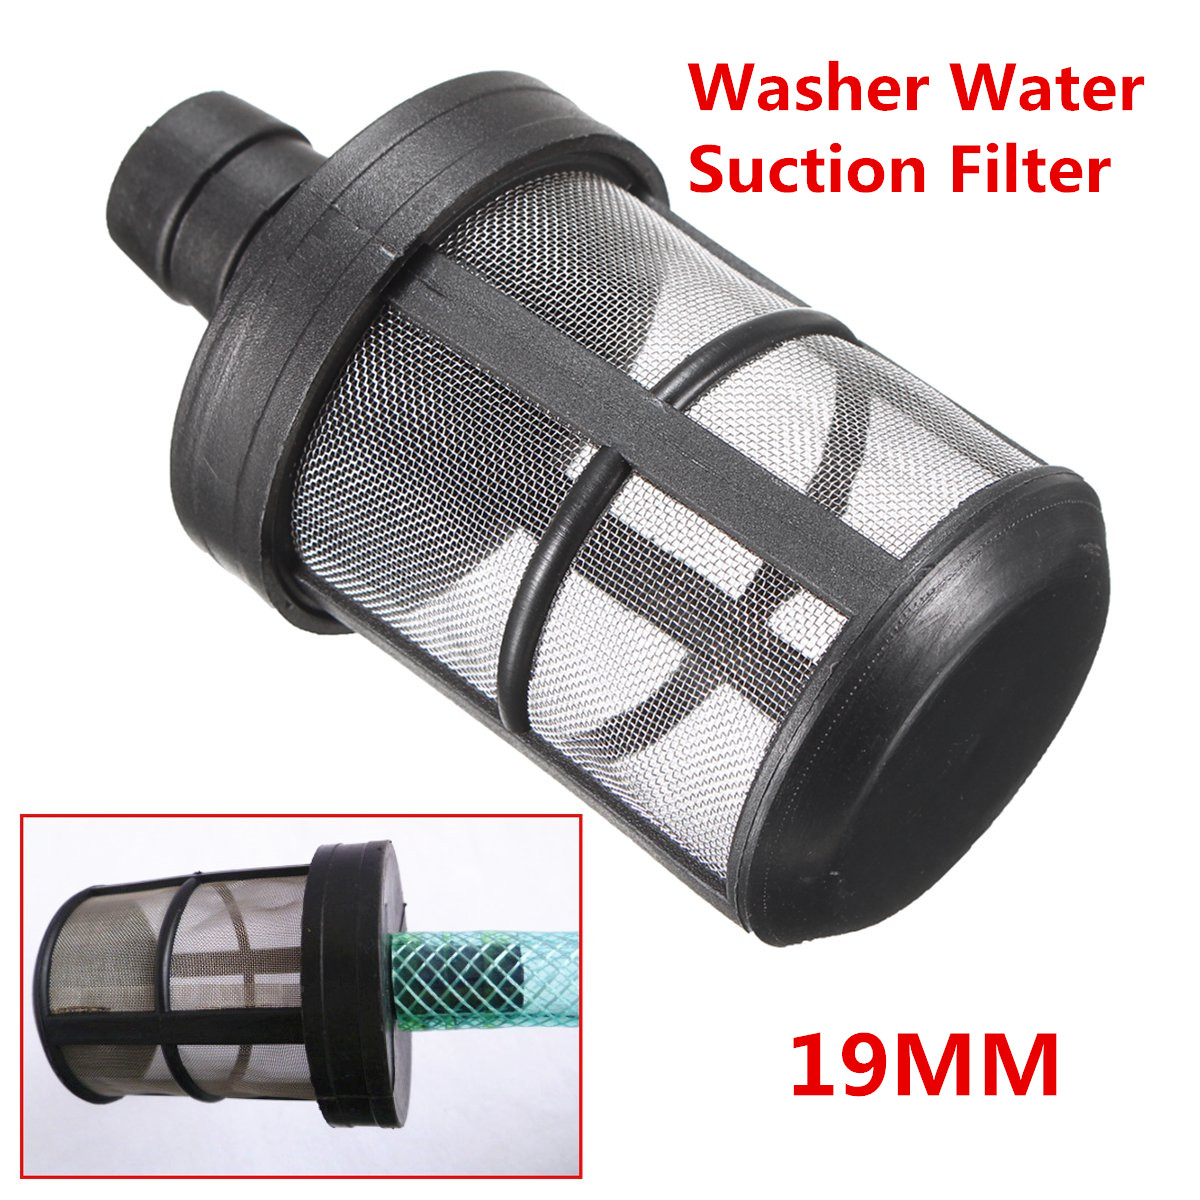 2Pcs-Pressure-Washer-Water-Pump-Suction-Filter-For-Washing-Machine-Tub-Drum-34-19MM-1601774-1